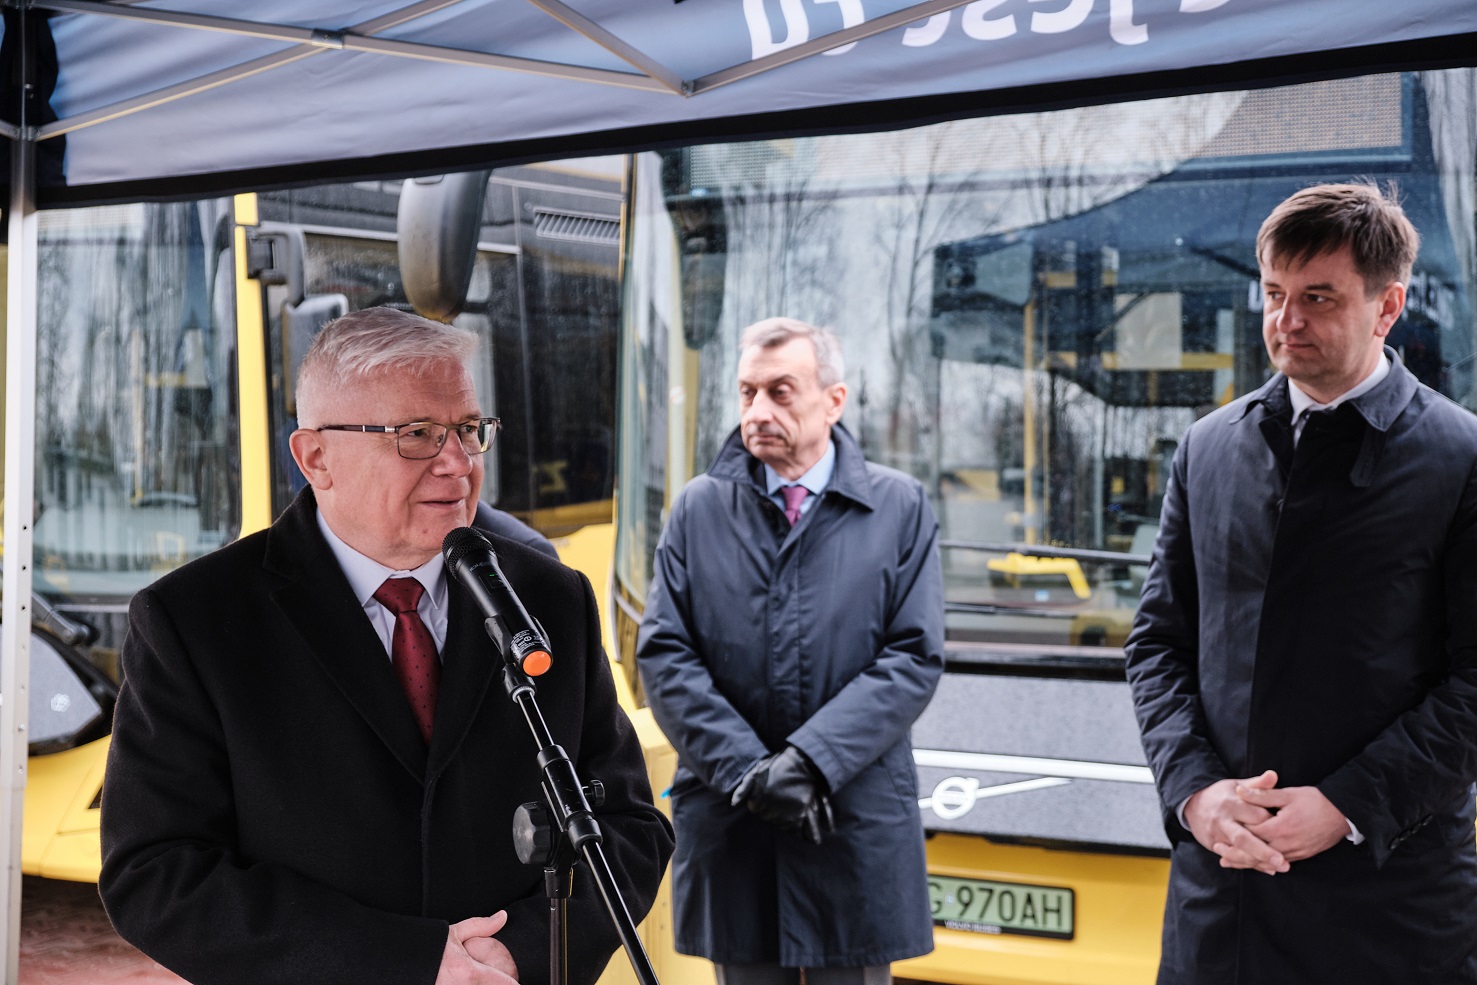 Prezydent Gliwic i zstępca prezydenta na tle autobusów